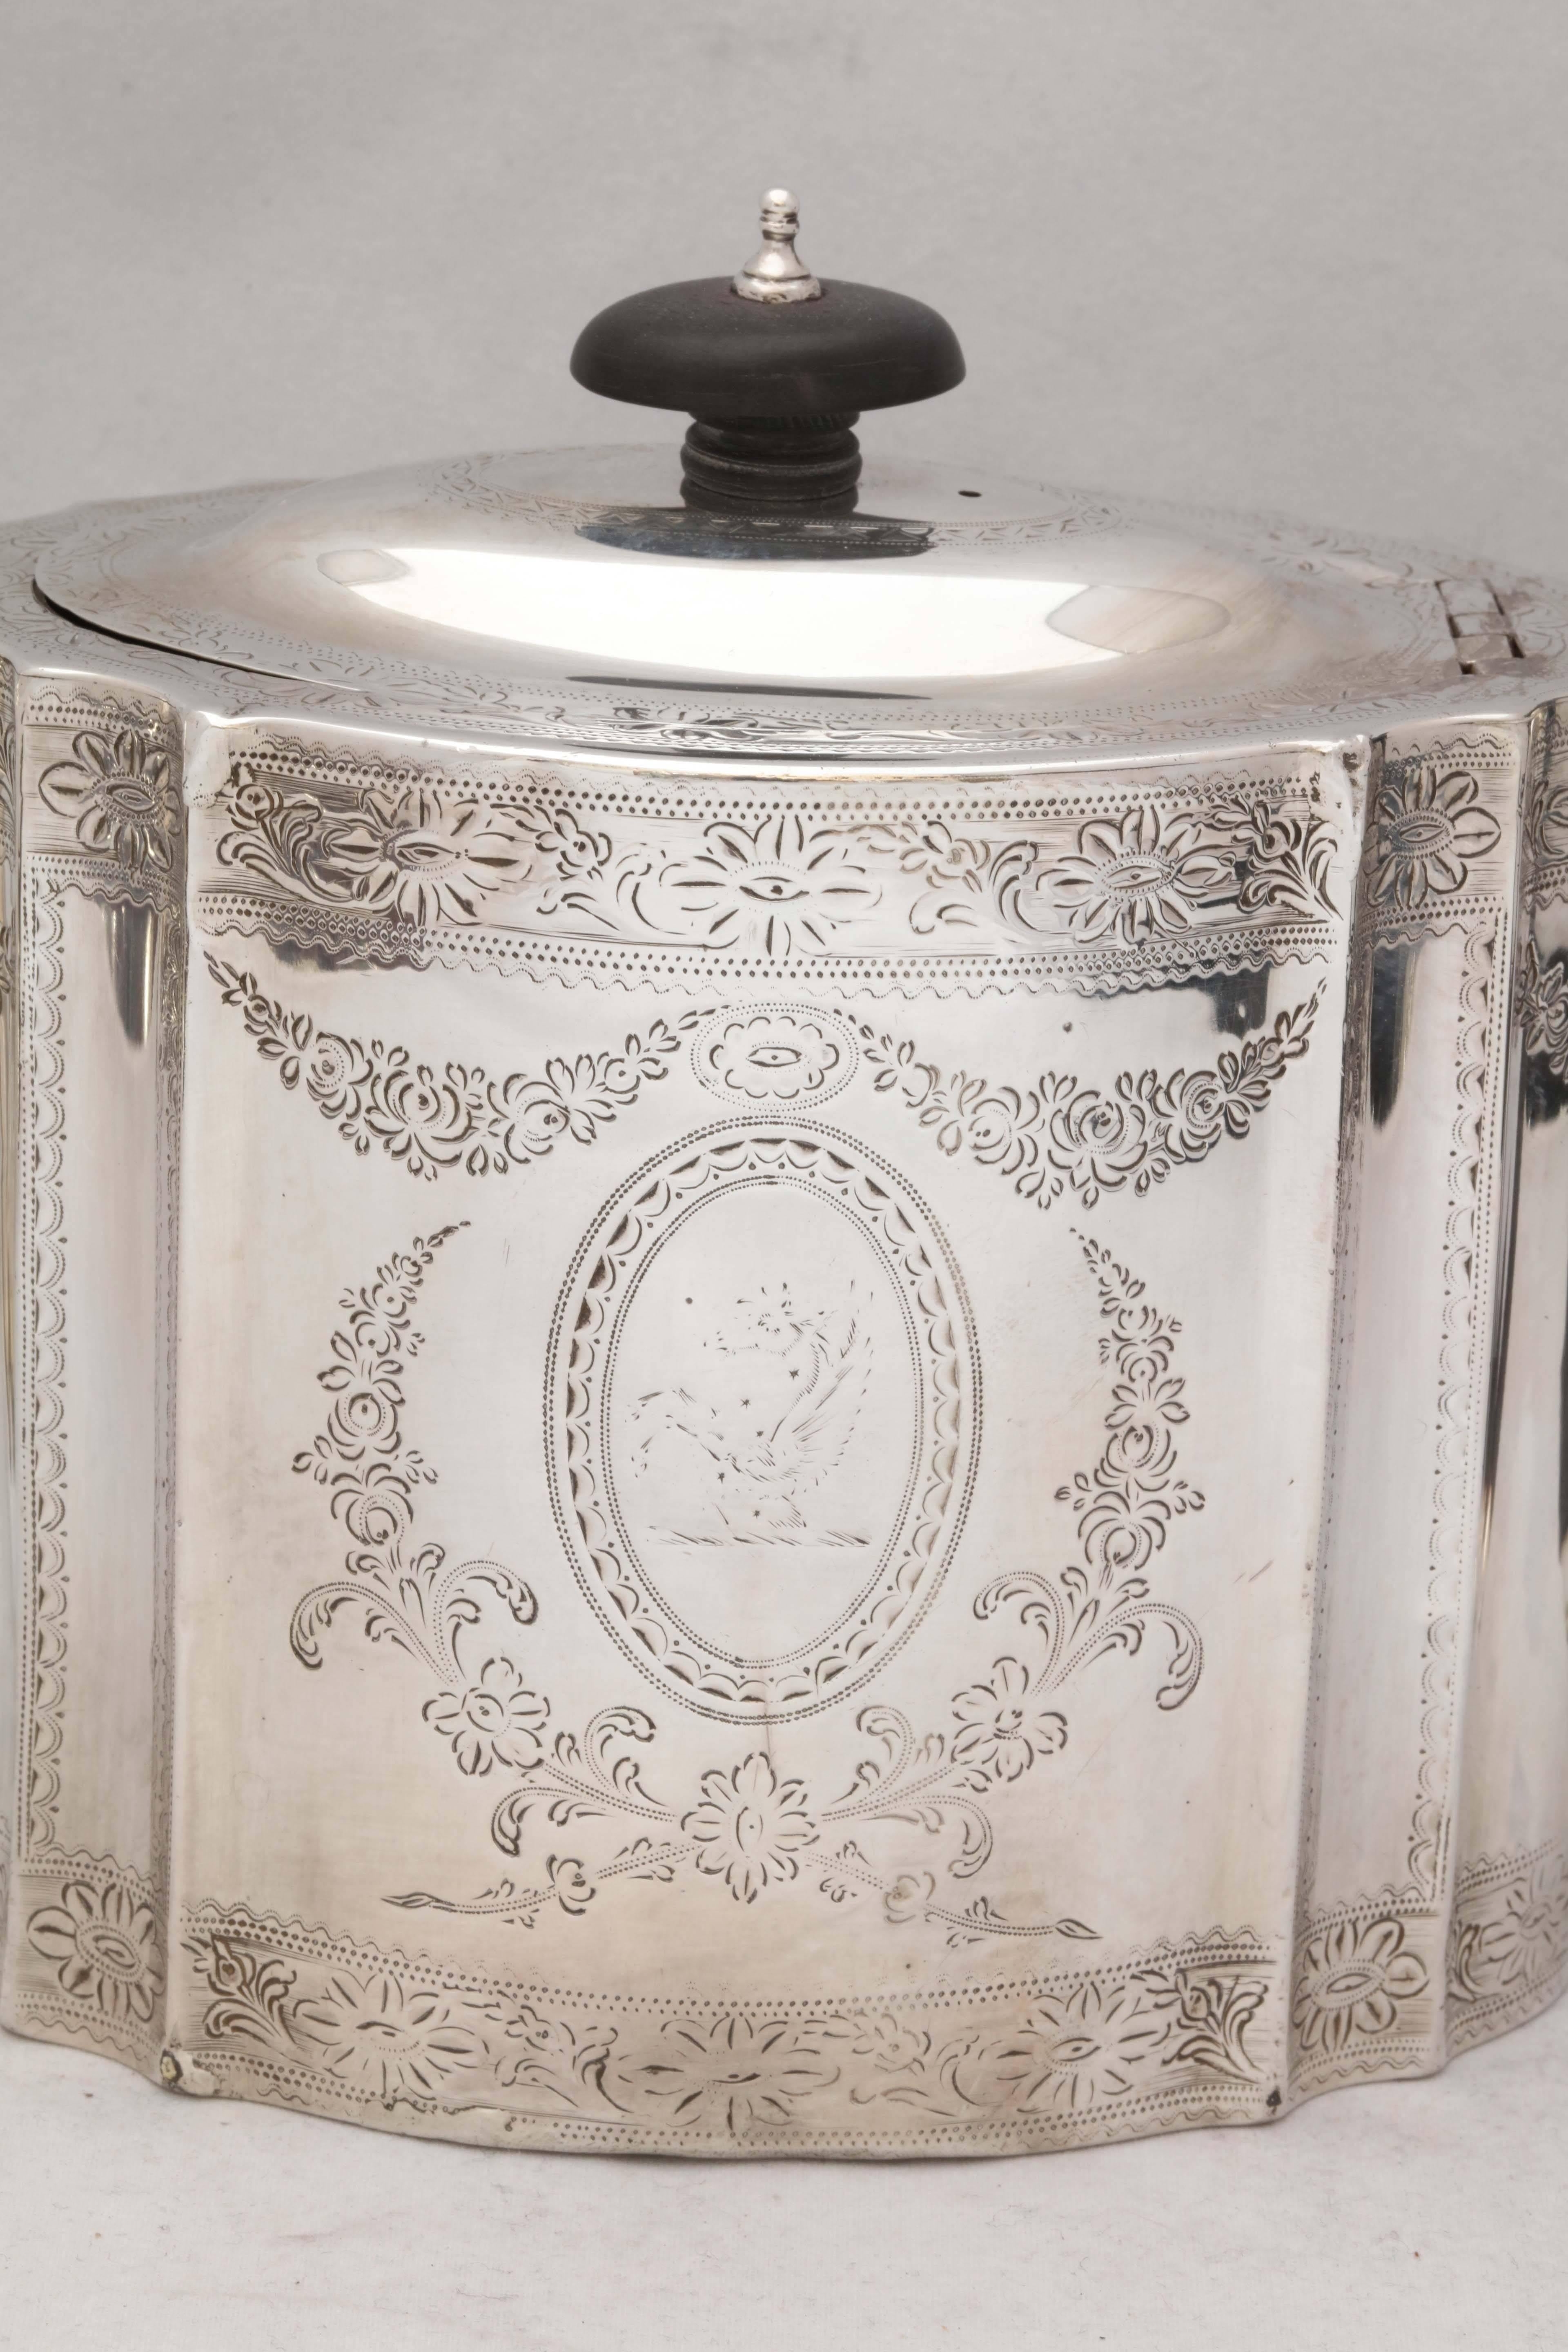 Georgian sterling silver tea pot, London, 1787, Charles Aldridge, maker. Stands 6